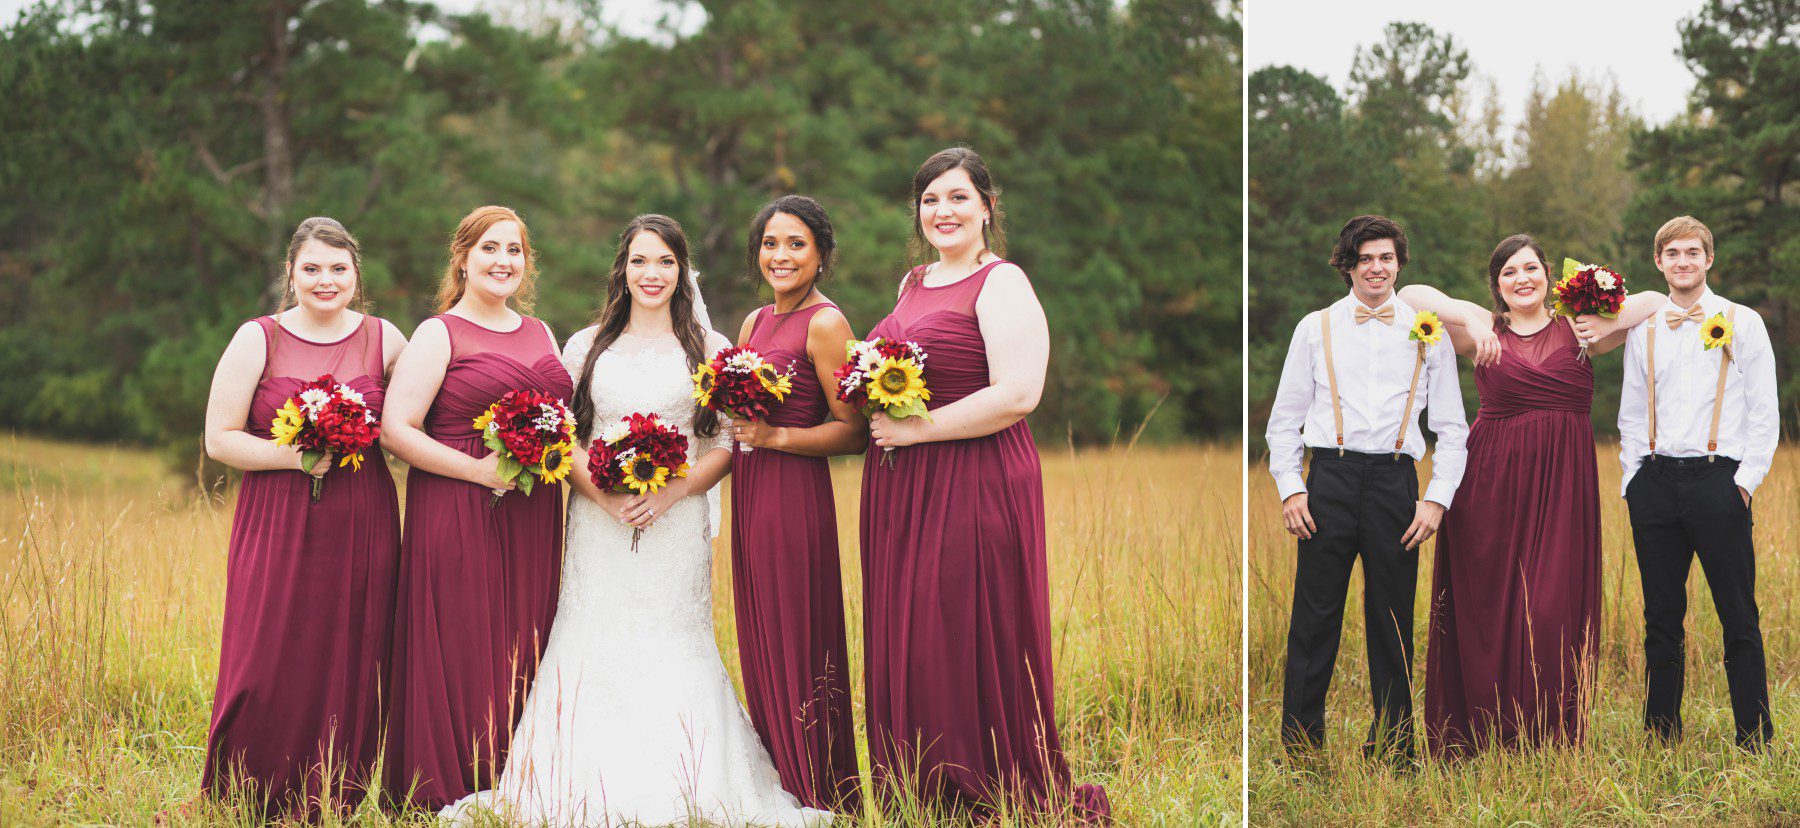 Nashville wedding photographer fall bridal party photos in field 